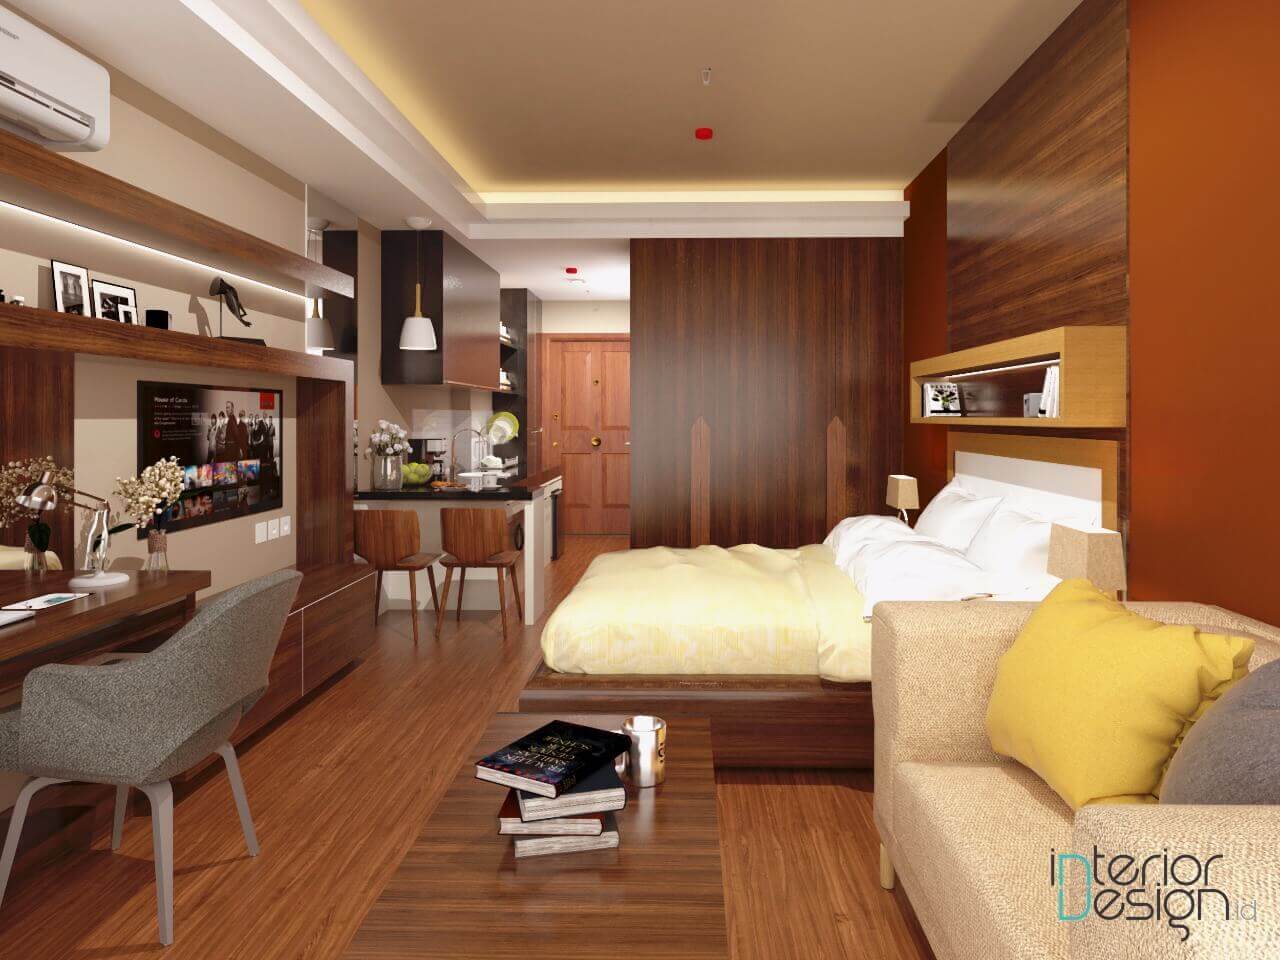 Jasa Desain Interior Apartemen Jakarta - InteriorDesign.id